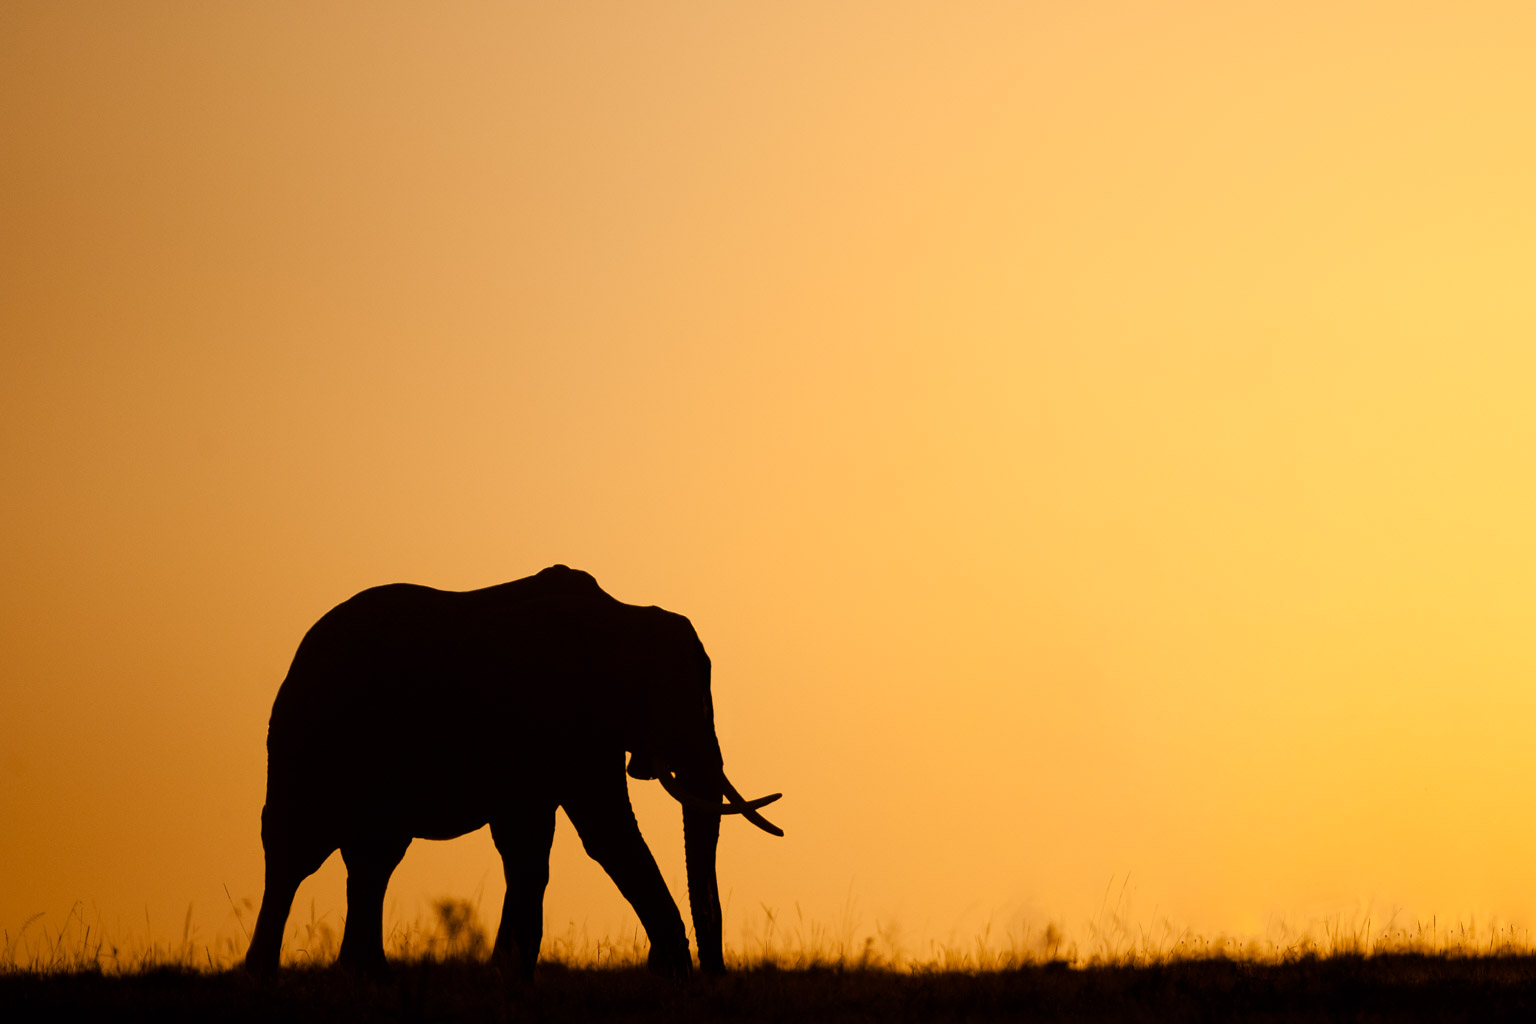 Elephant silhouette with golden orange sky and sunrise in Kenya taken by Ian Mears